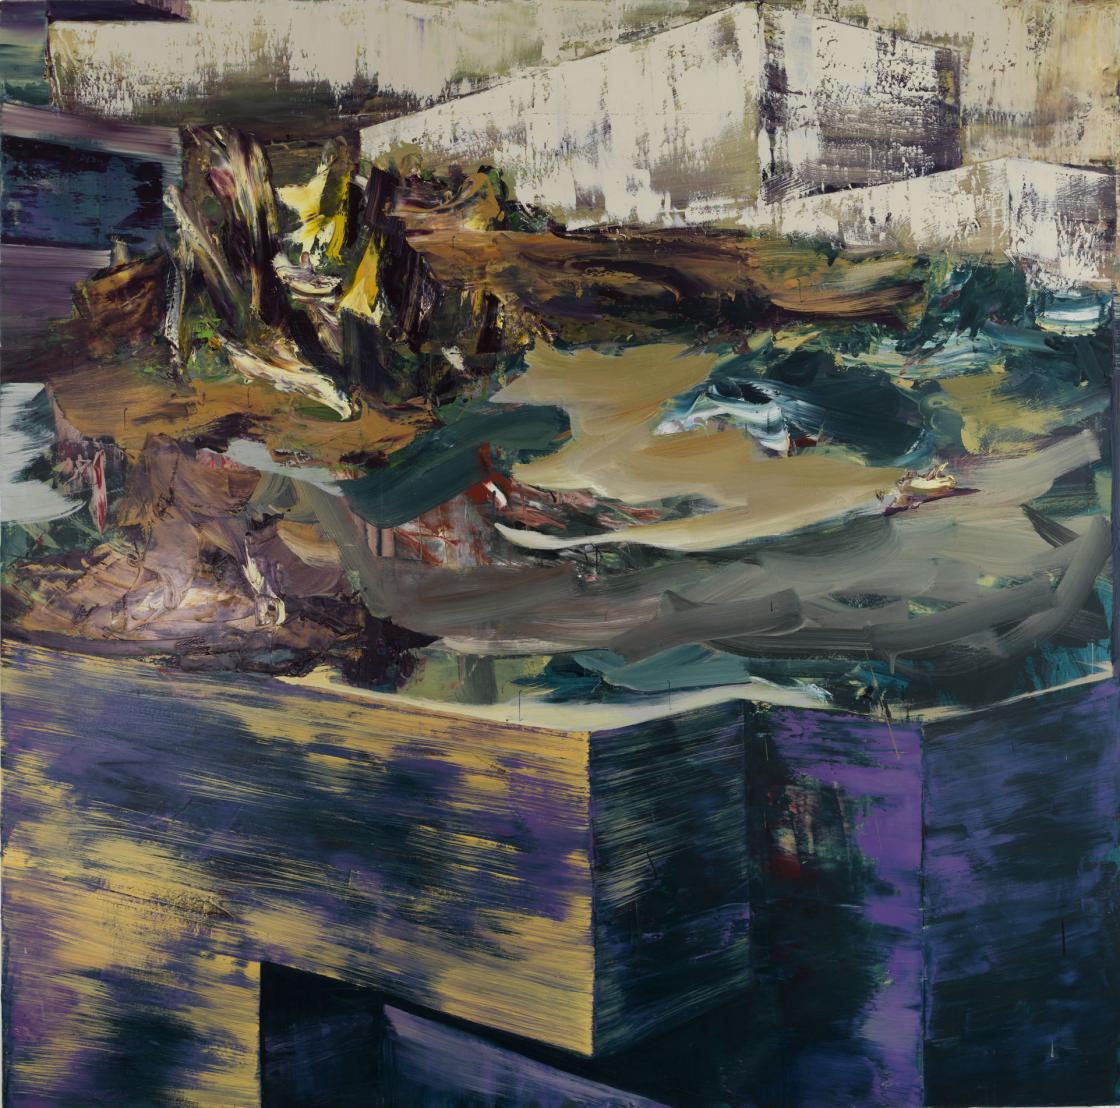 Dan Maciuca, Massive Habitation, oil on canvas, 200 x 200 cm, 2016